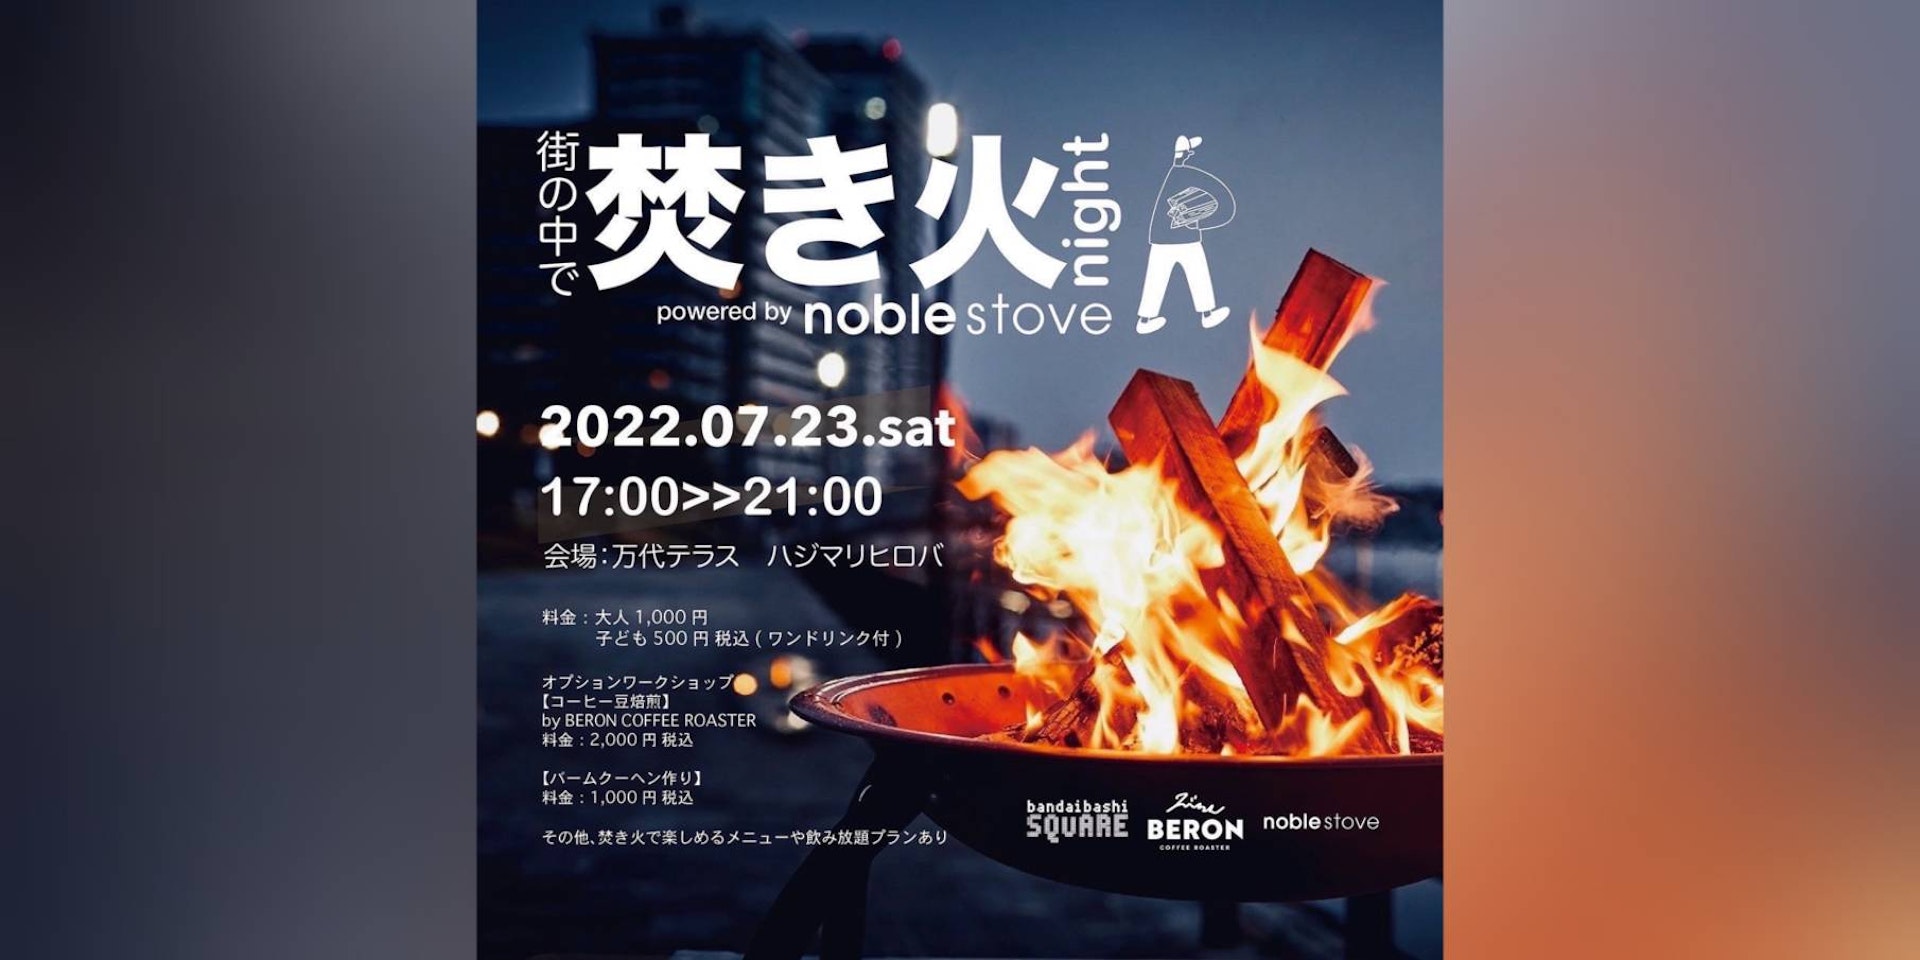 2022/07/23/sat 【焚き火Night】 powered by @noblestove_niigata サムネイル画像